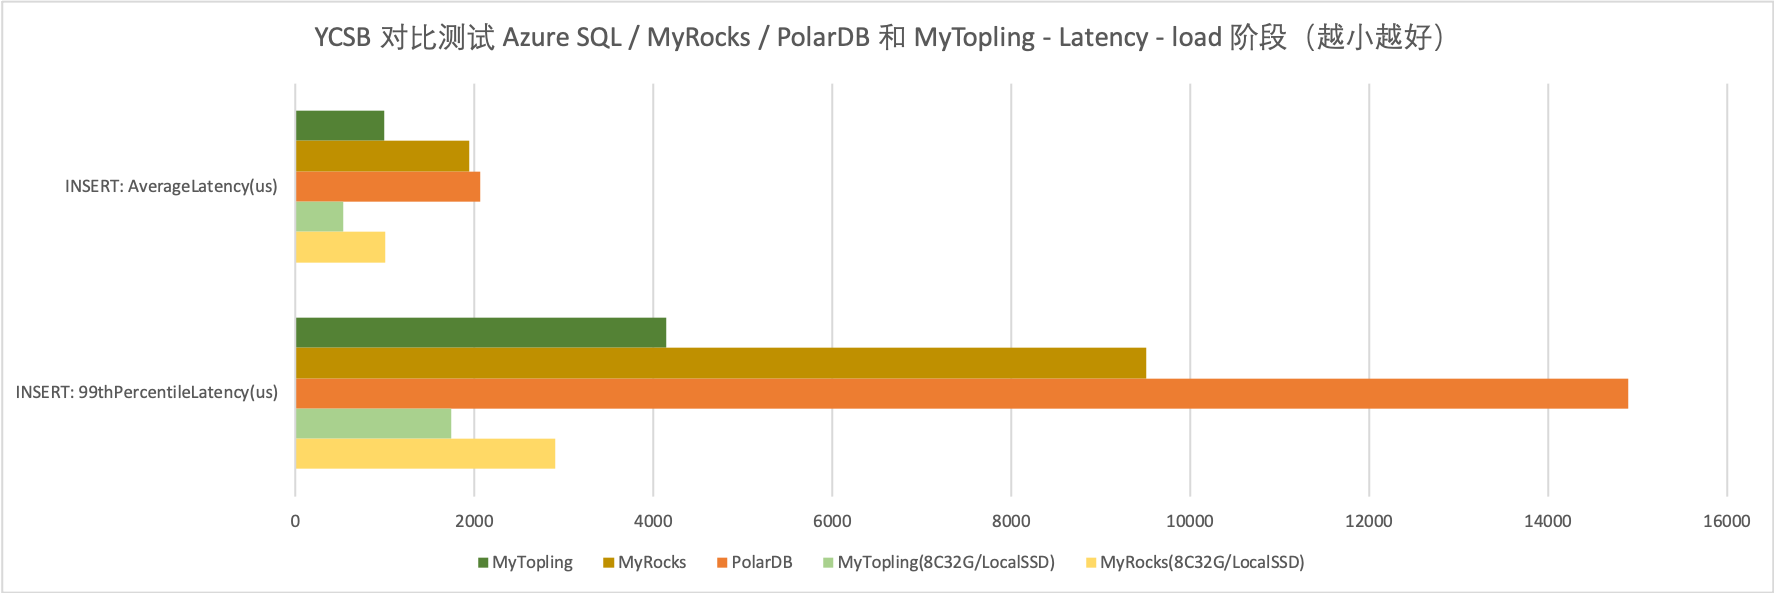 ycsb-latency-load